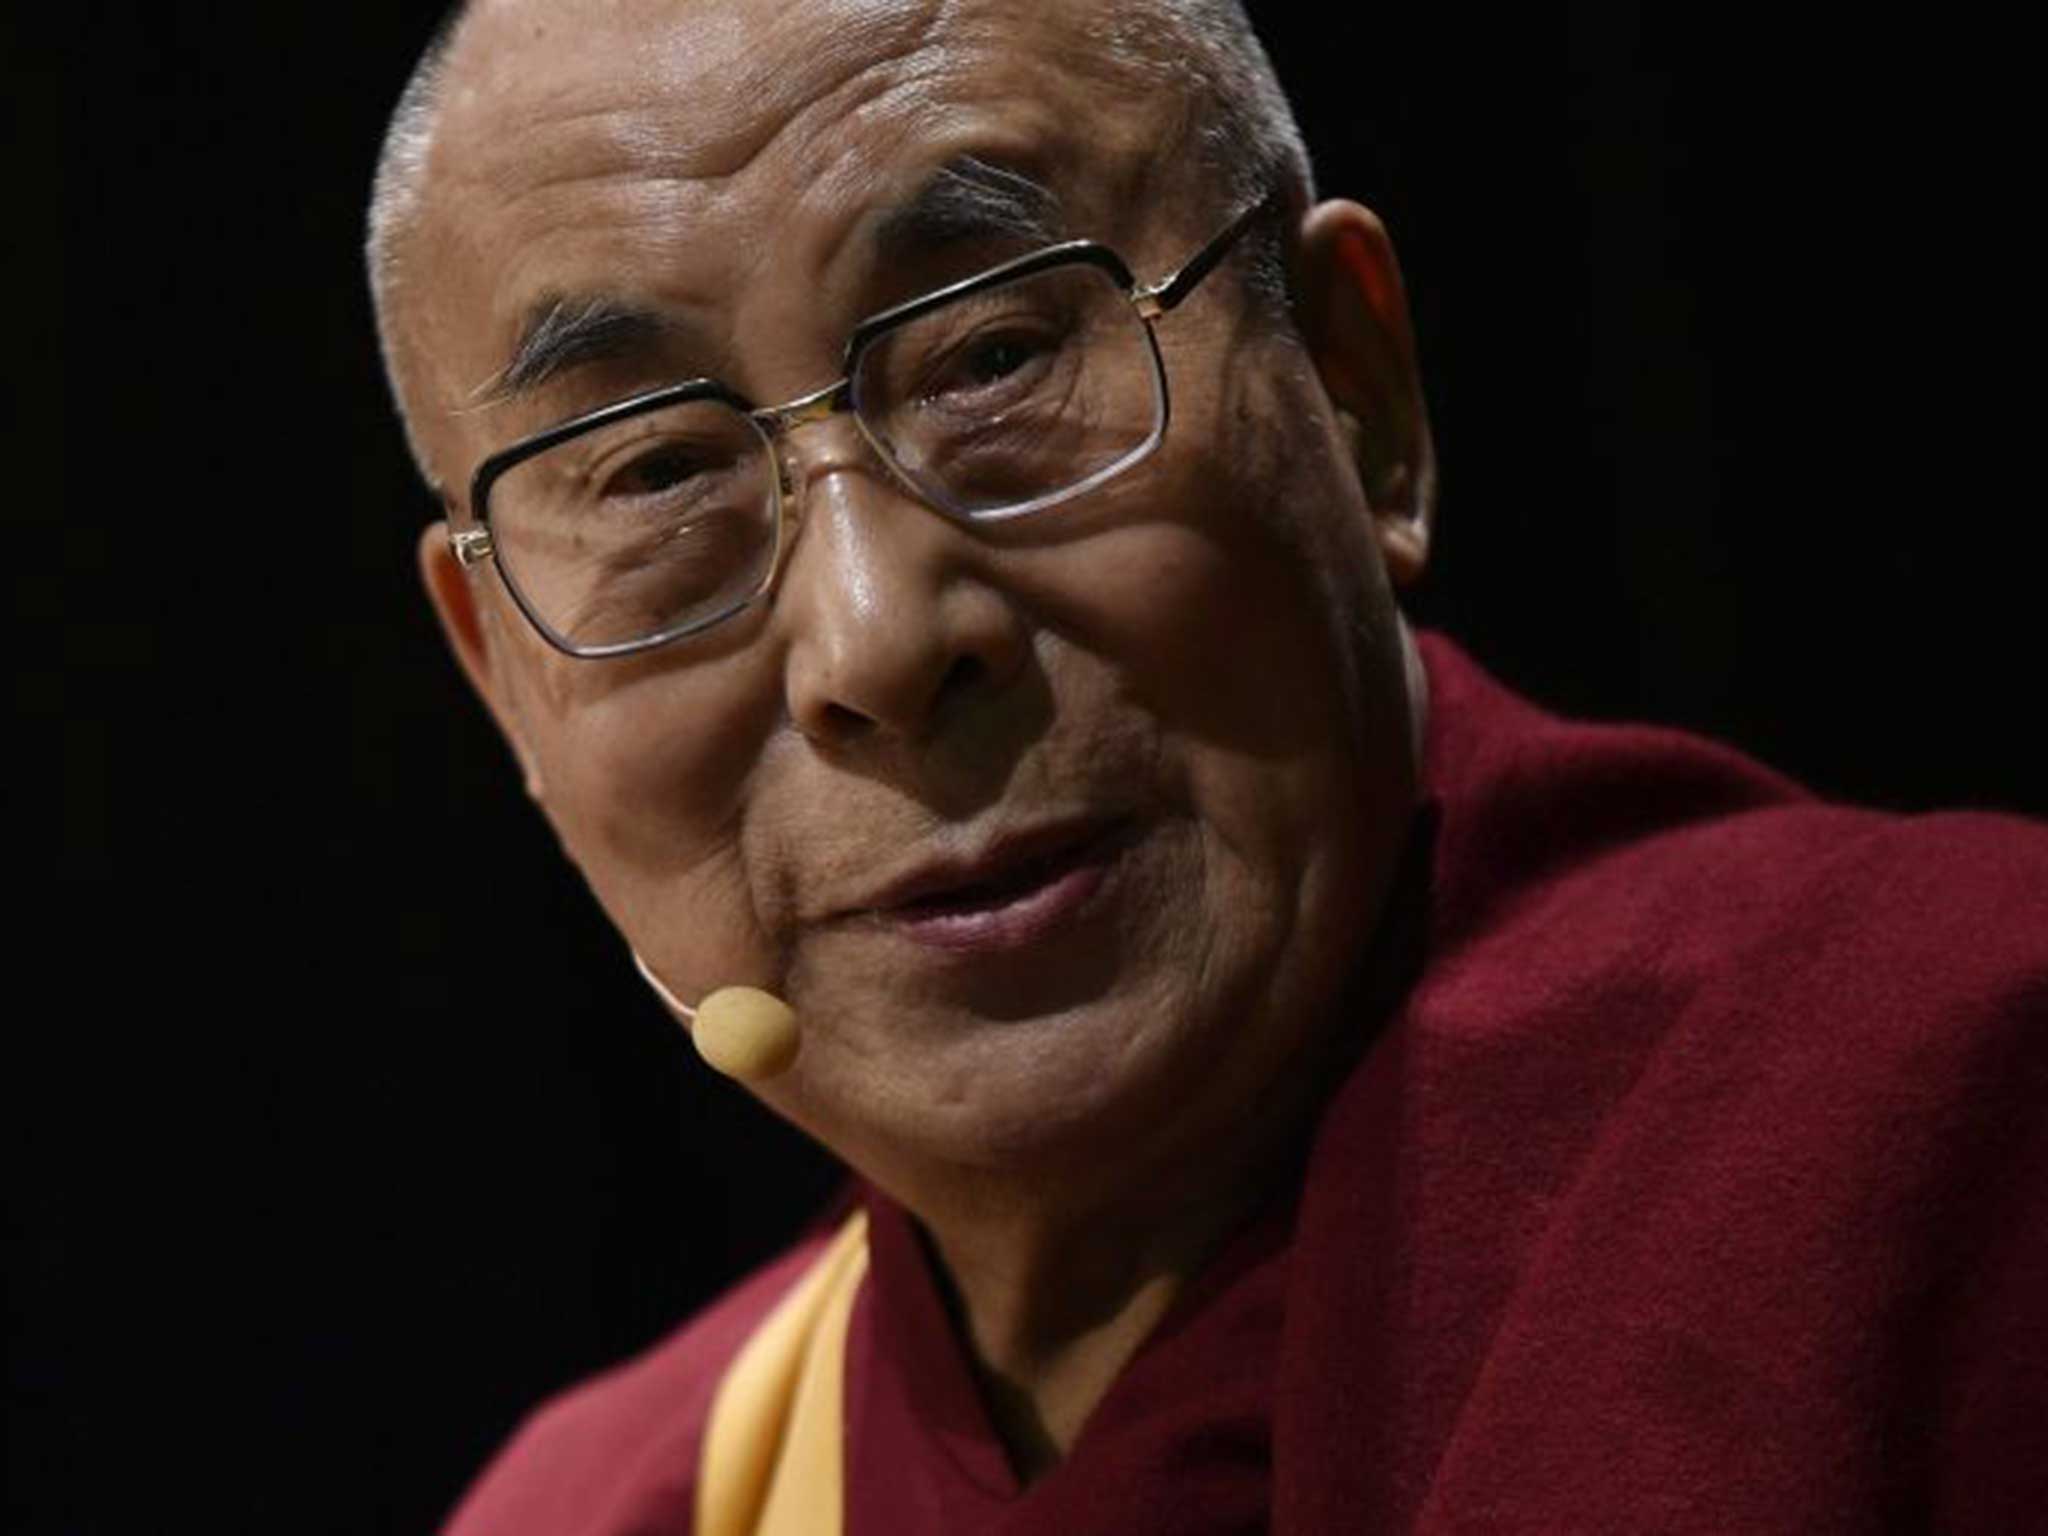 The Dalai Lama, 79, says the next tulku could be female